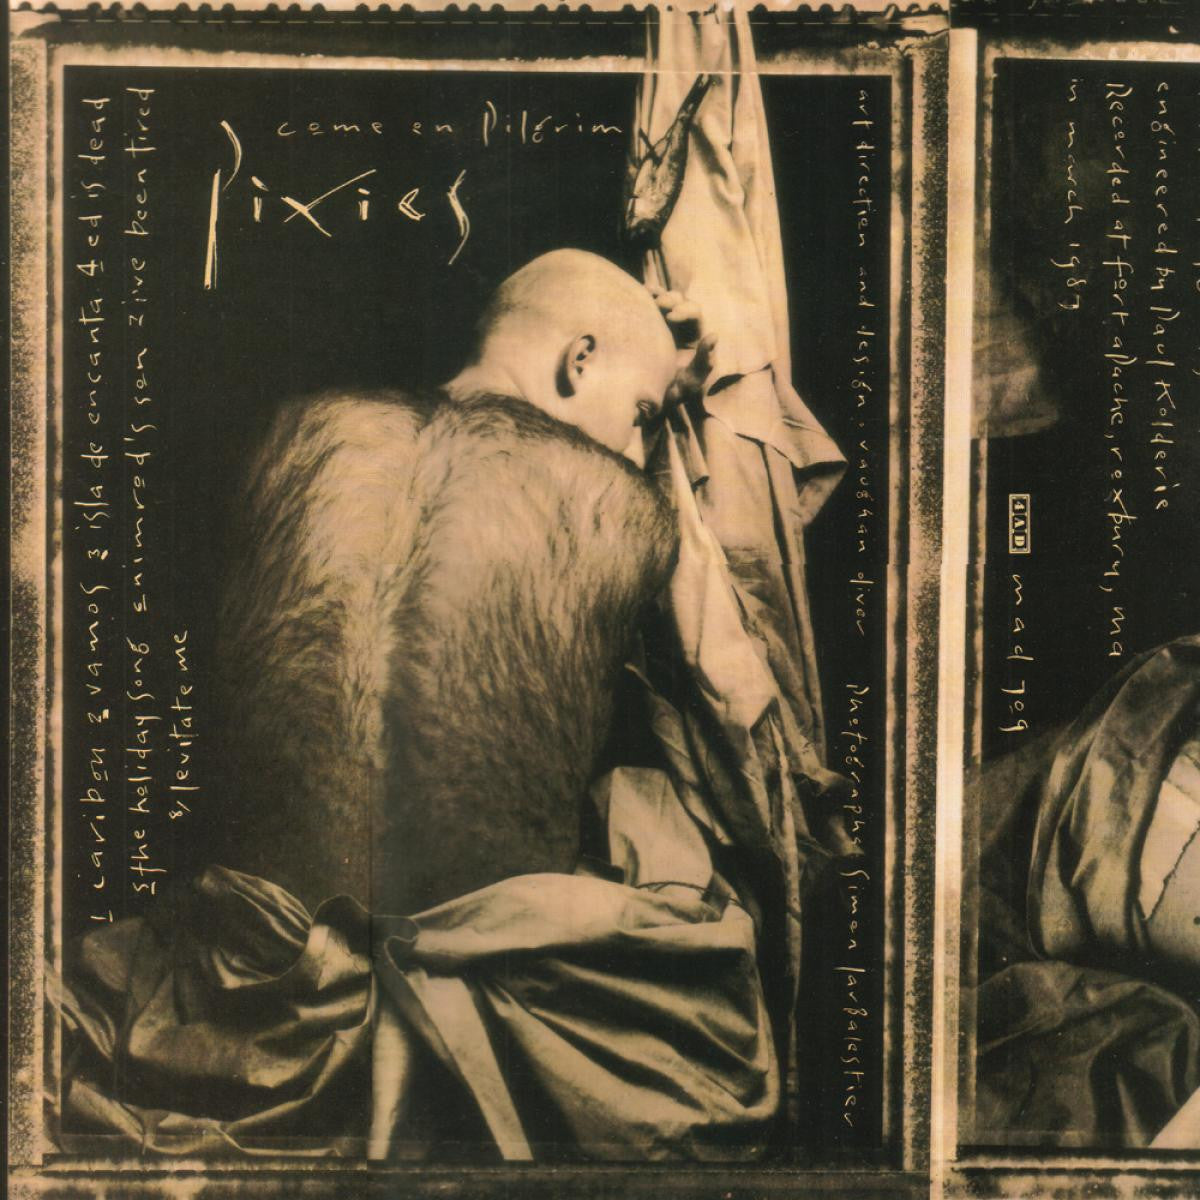 Pixies- Come On Pilgrim - Darkside Records